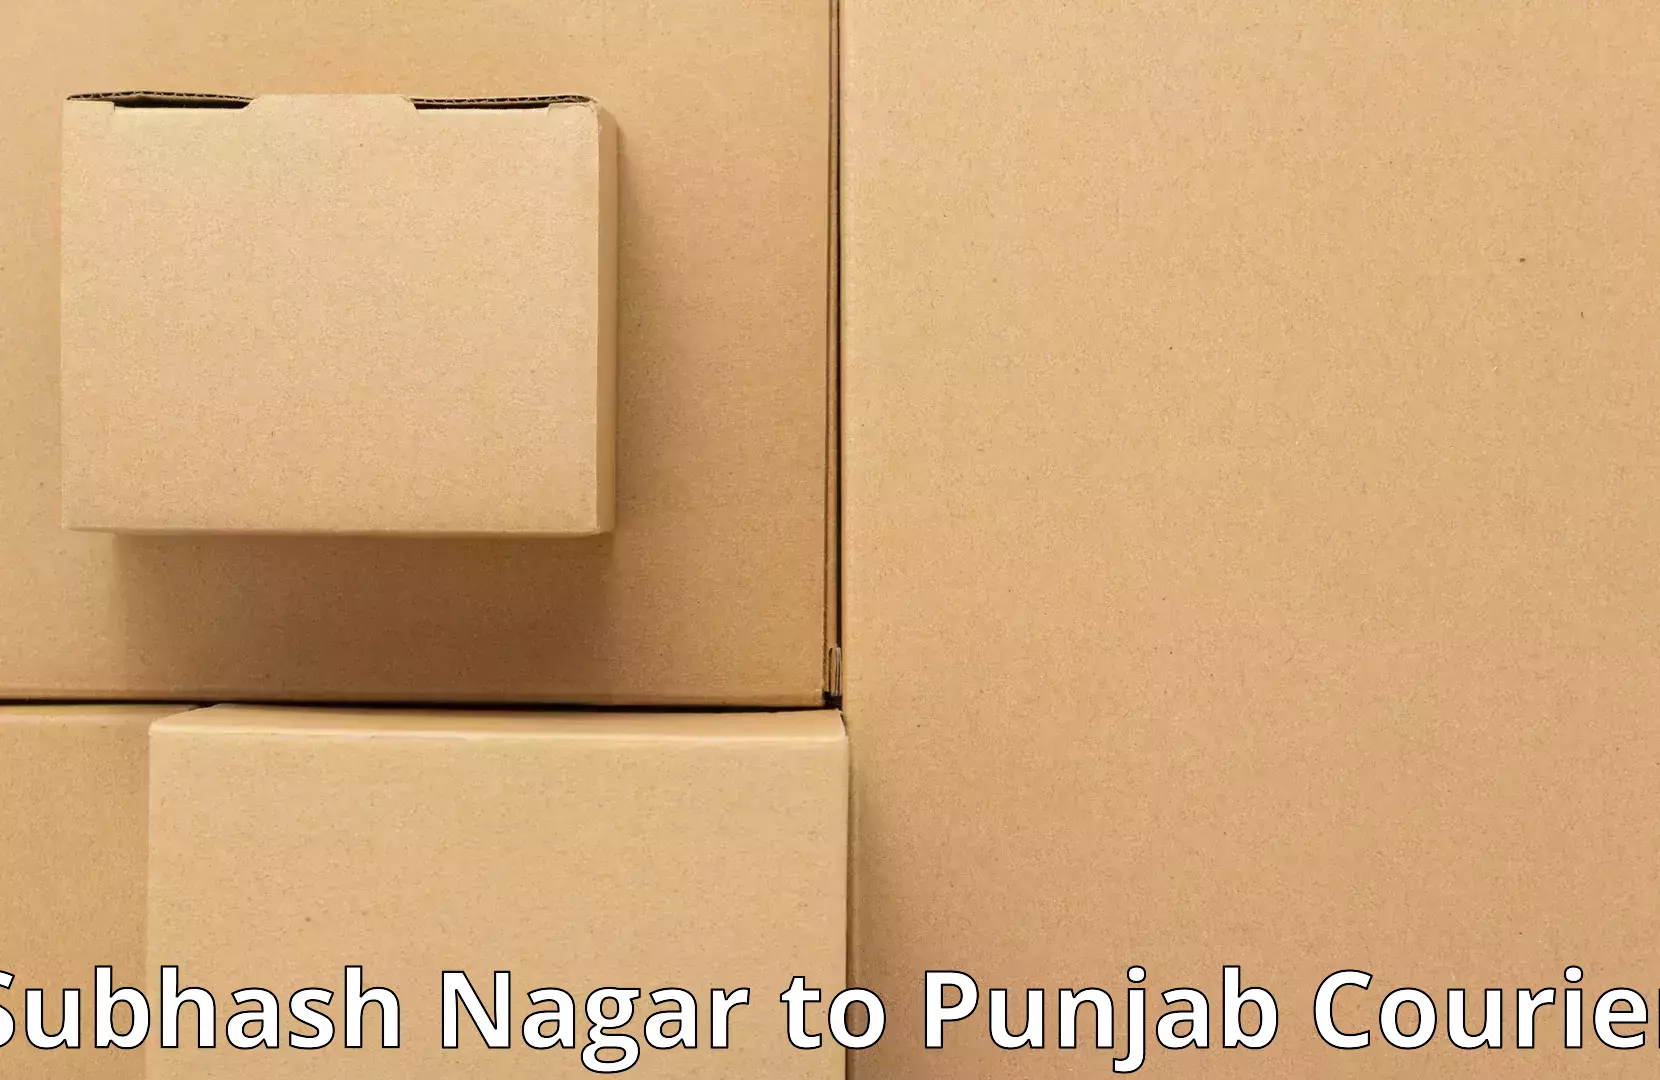 Furniture delivery service Subhash Nagar to Punjab